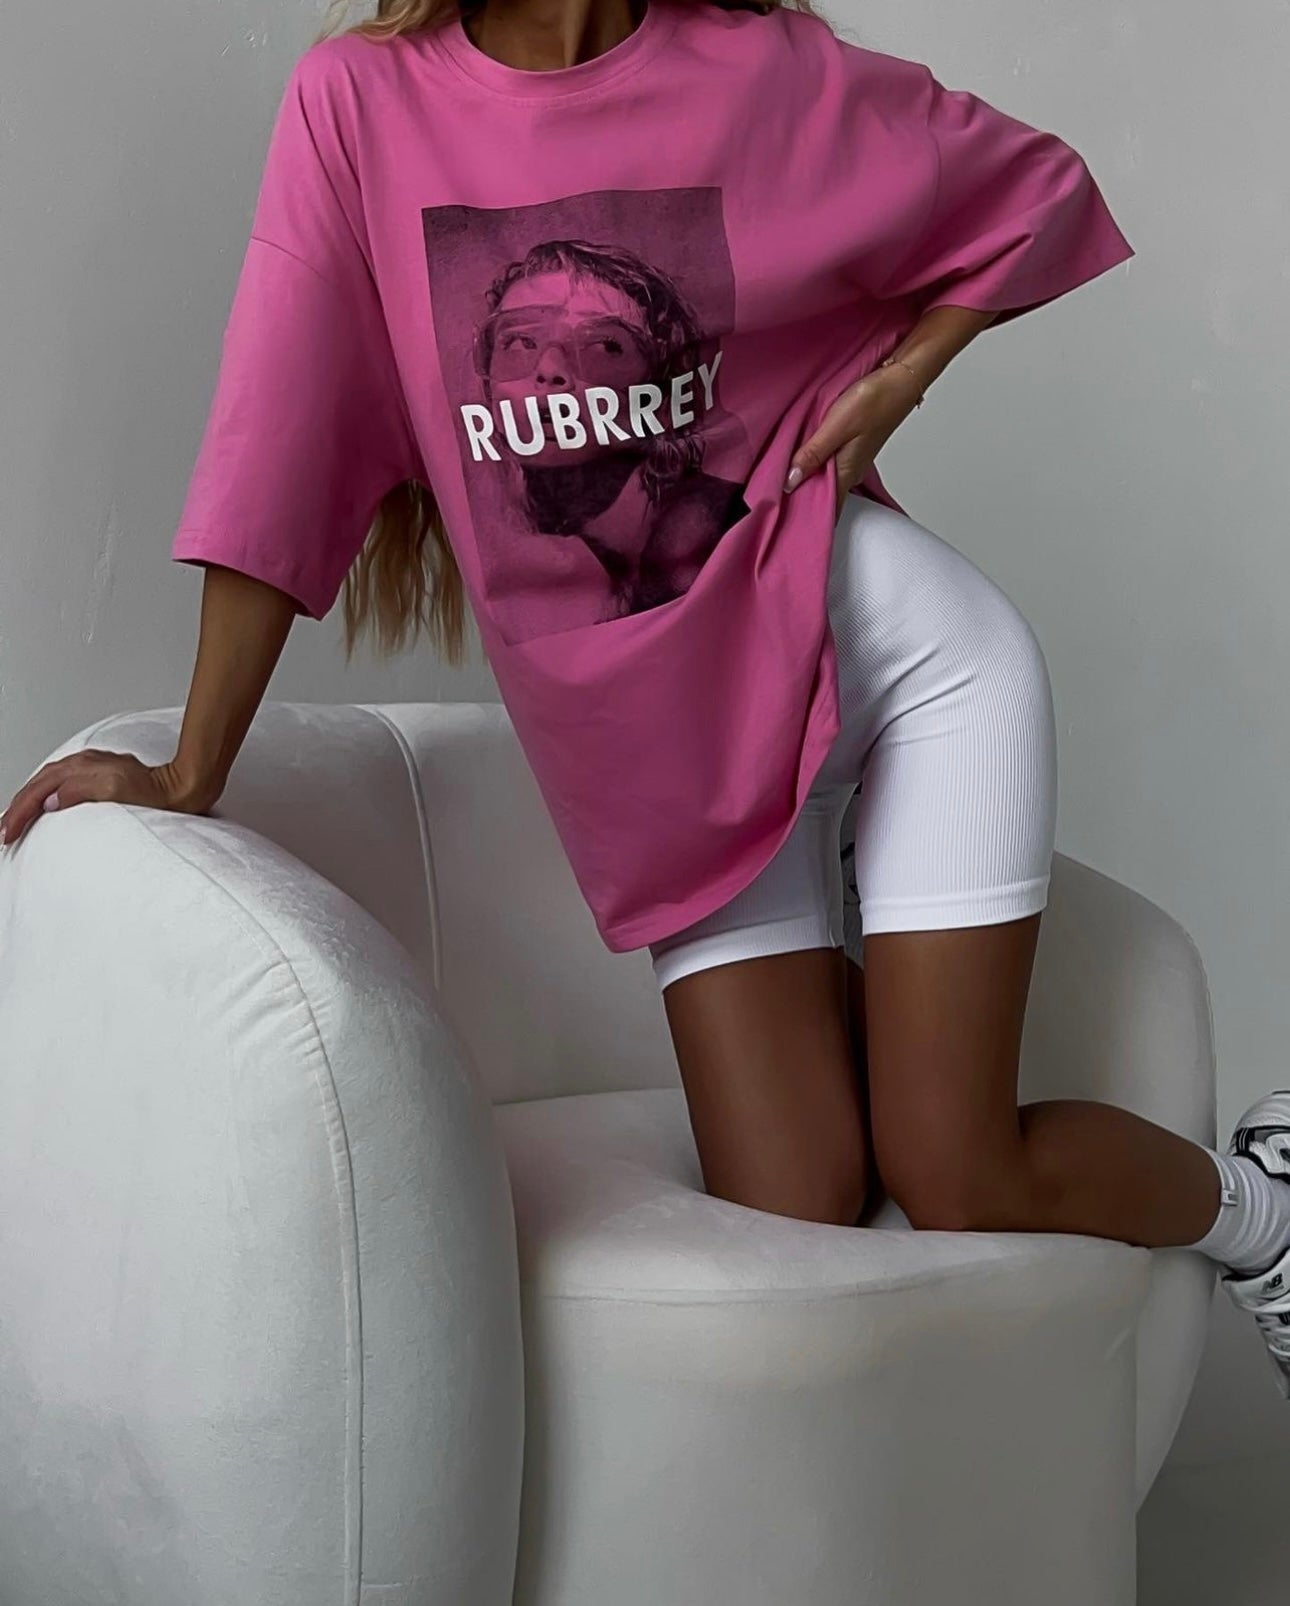 Rubrrey Tshirt